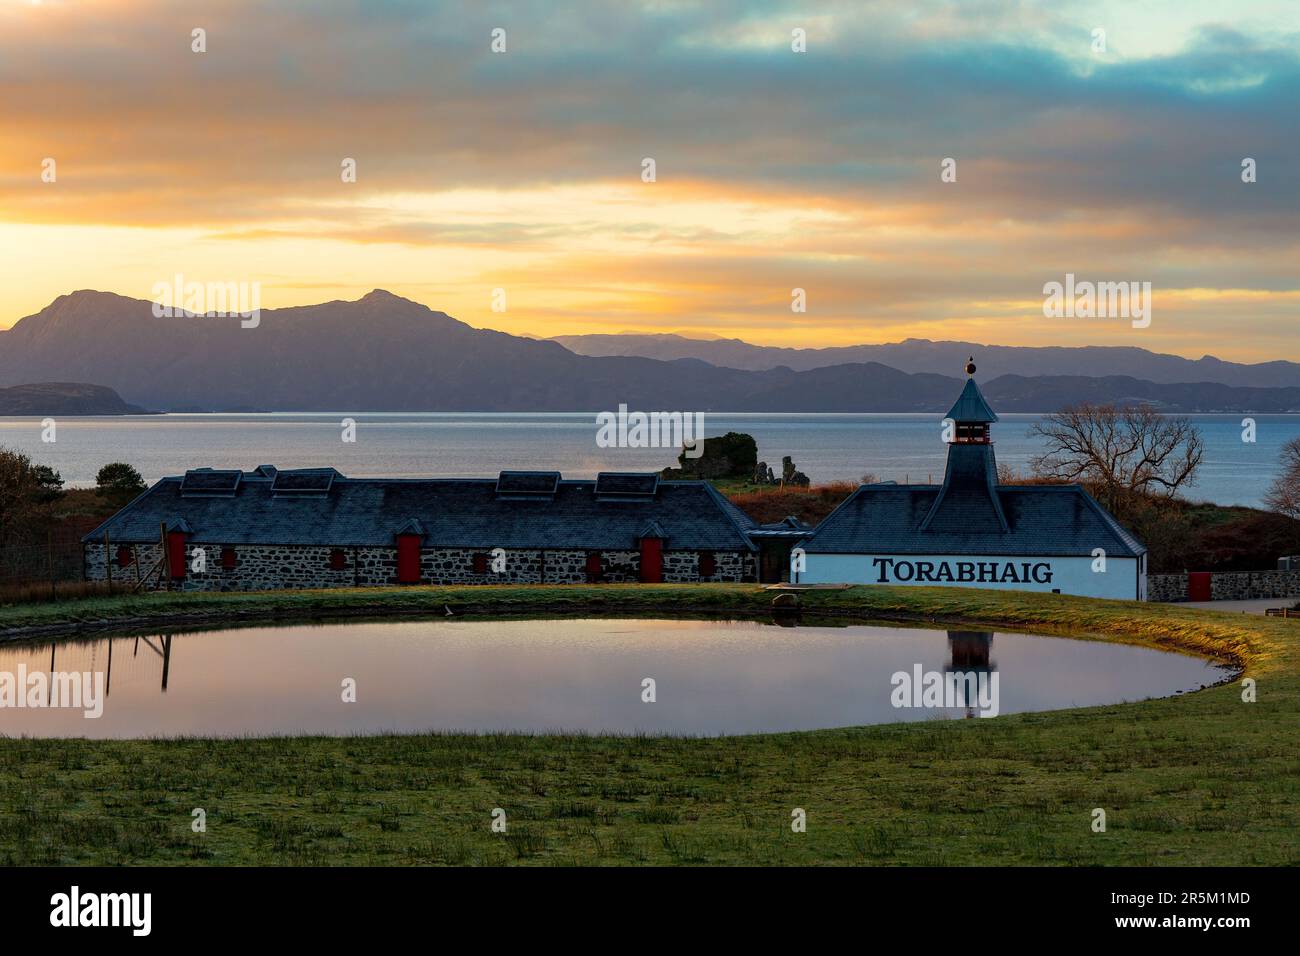 Torabhaig whisky distillery on Isle of Skye, Scotland Stock Photo